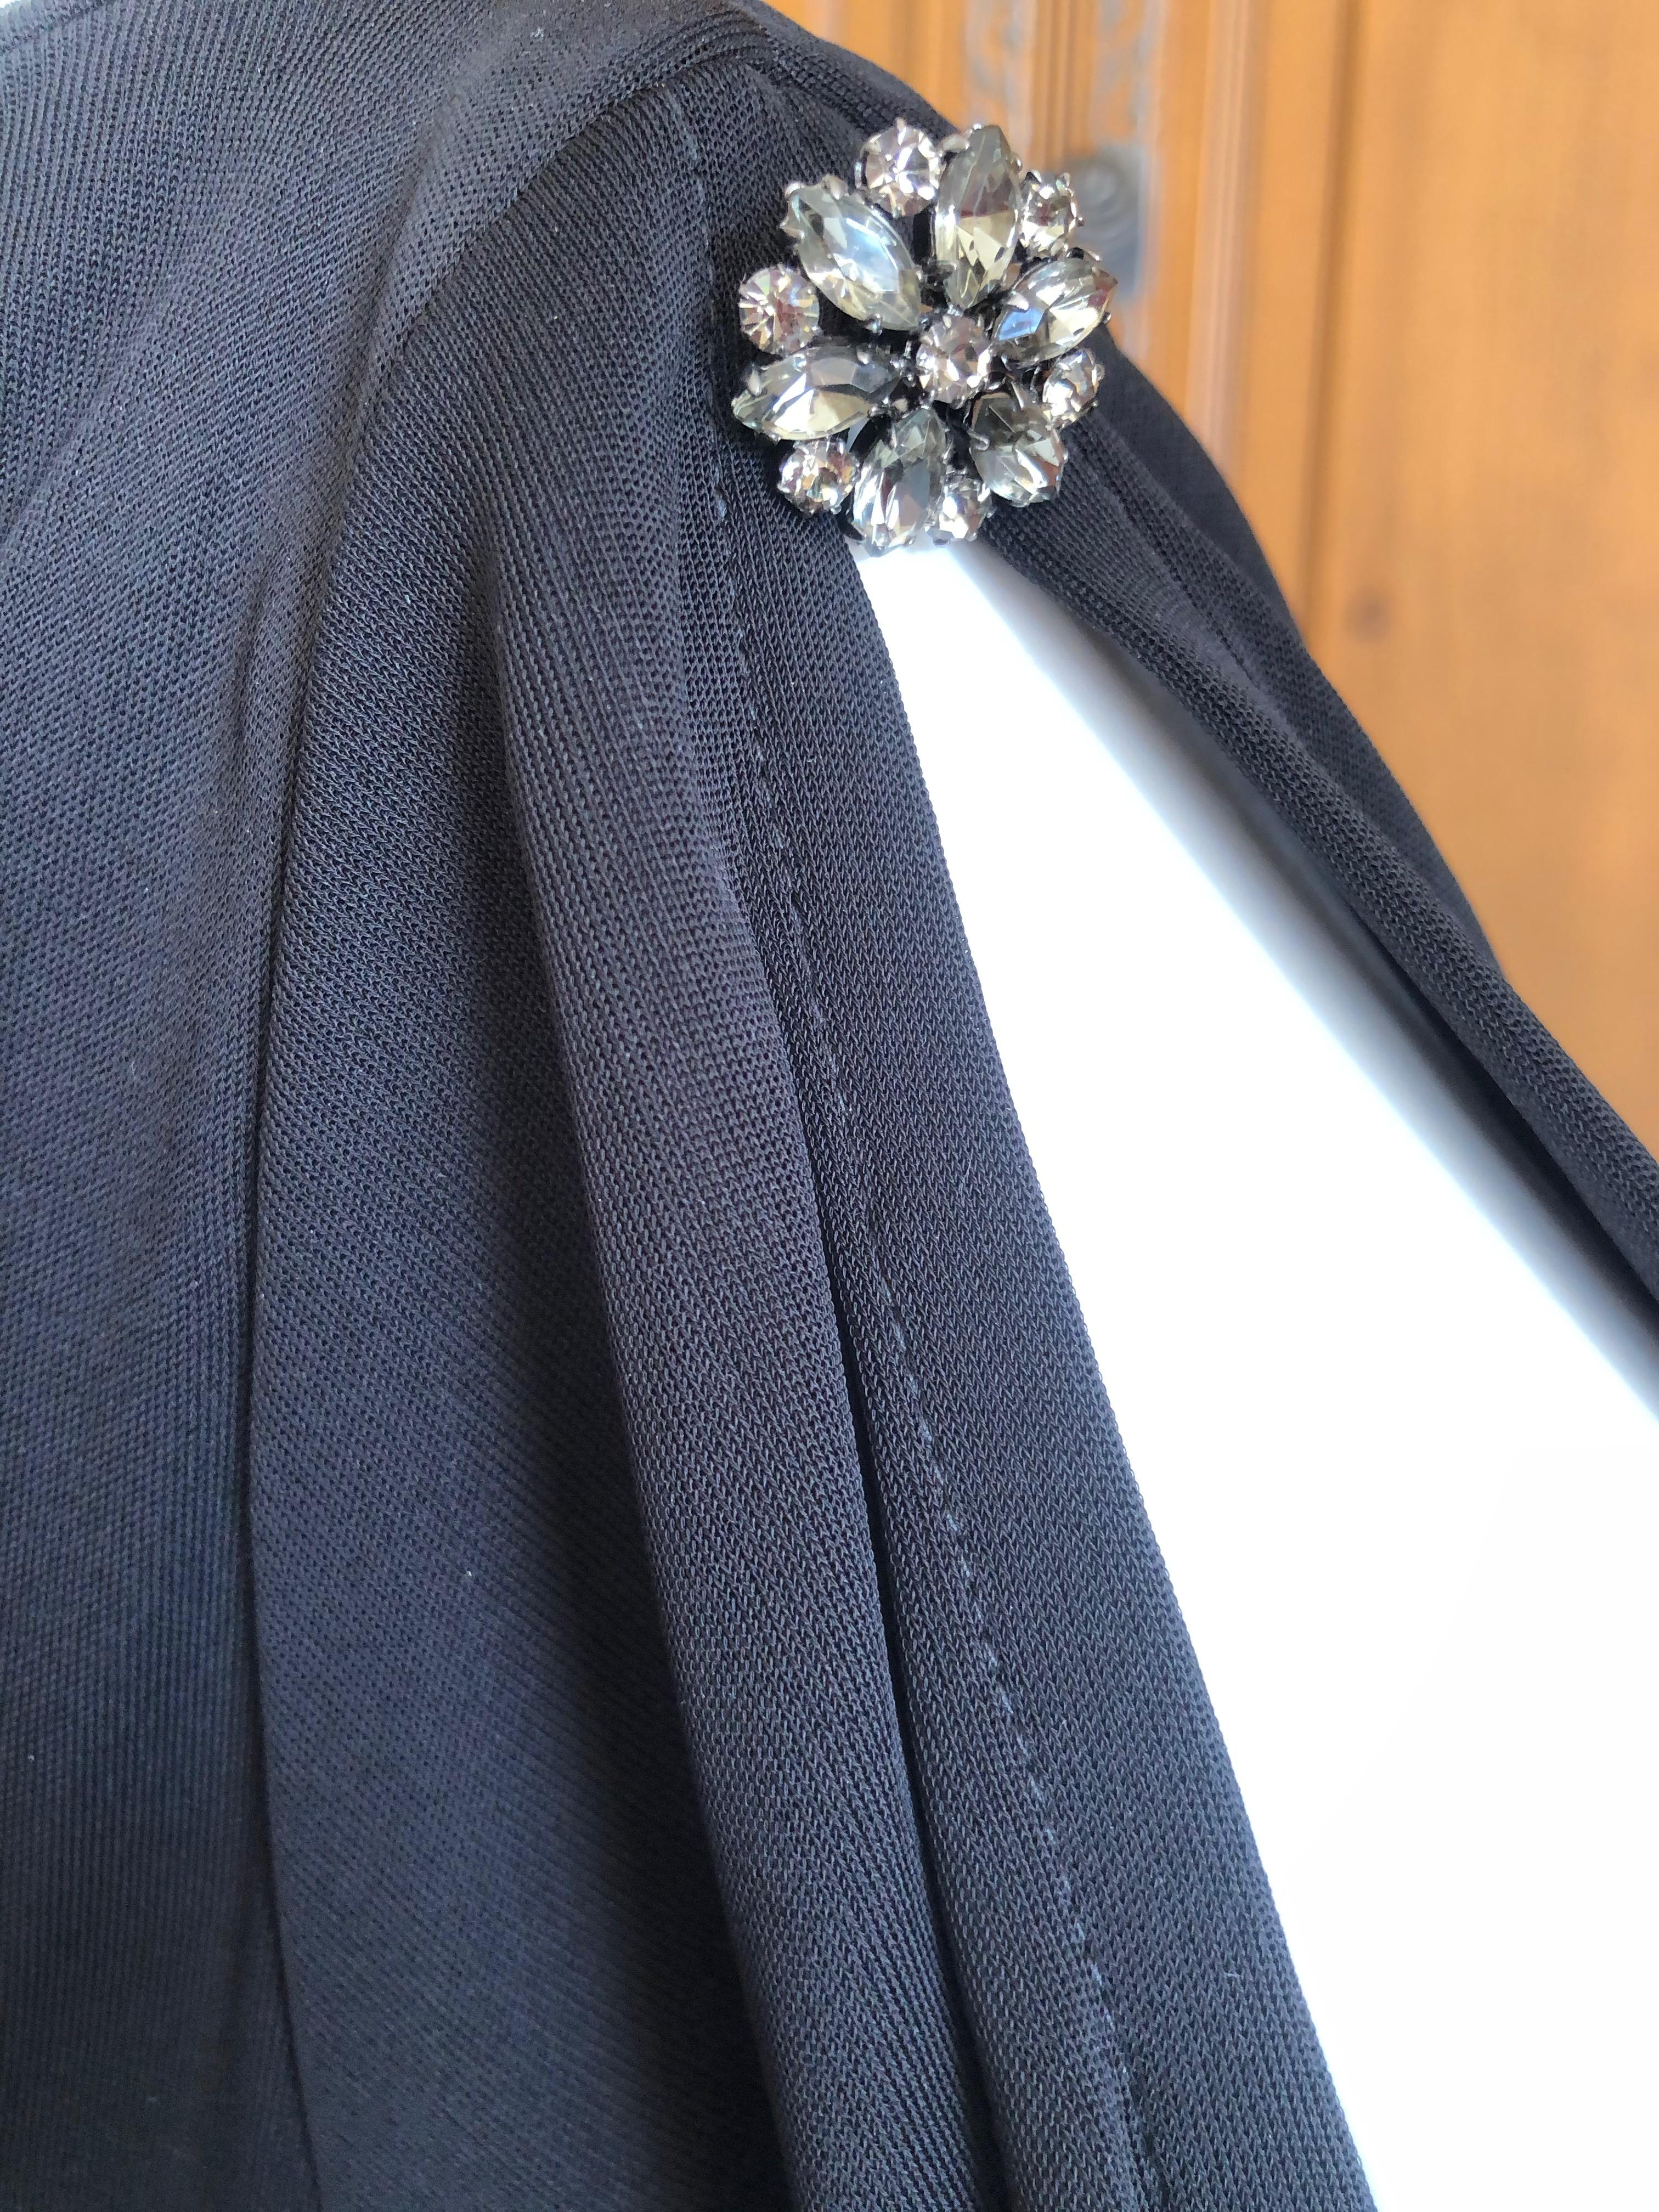 Yves Saint Laurent Rive Gauche 1980's Black Skirt Suit with Jewel Accented Cold Shoulders
  Sz 44
 Bust 42